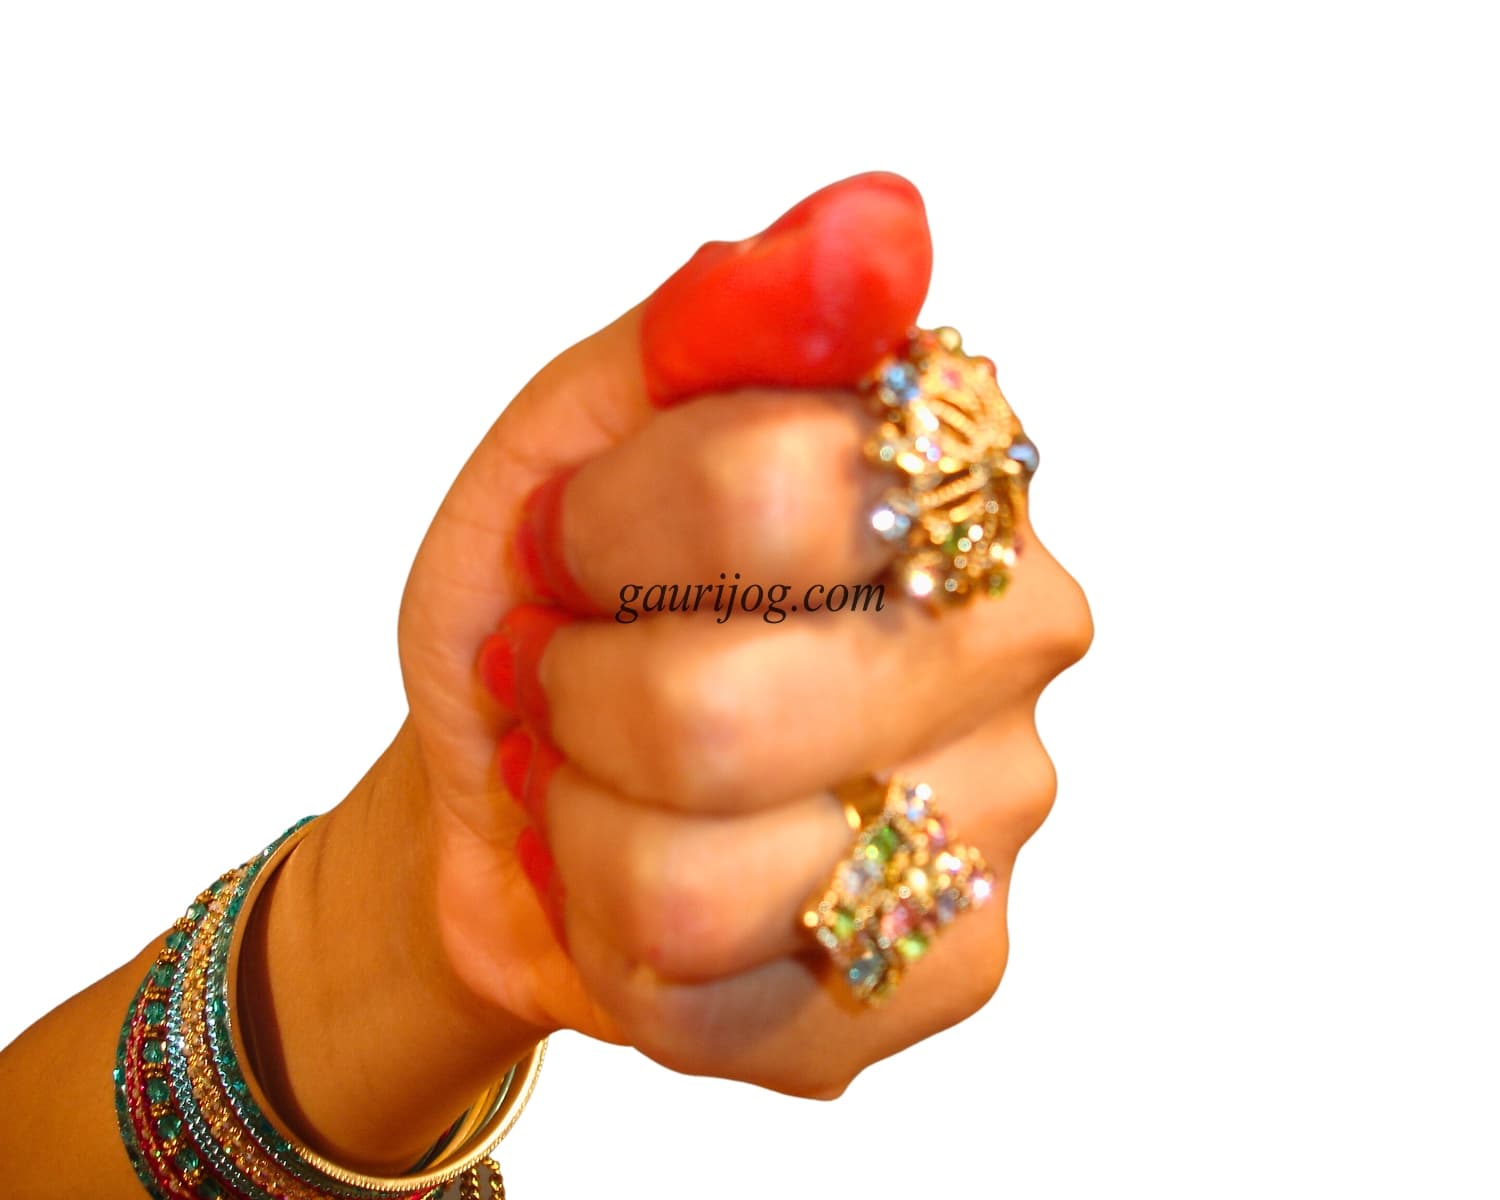 Mushti Hand Gesture by Gauri Jog